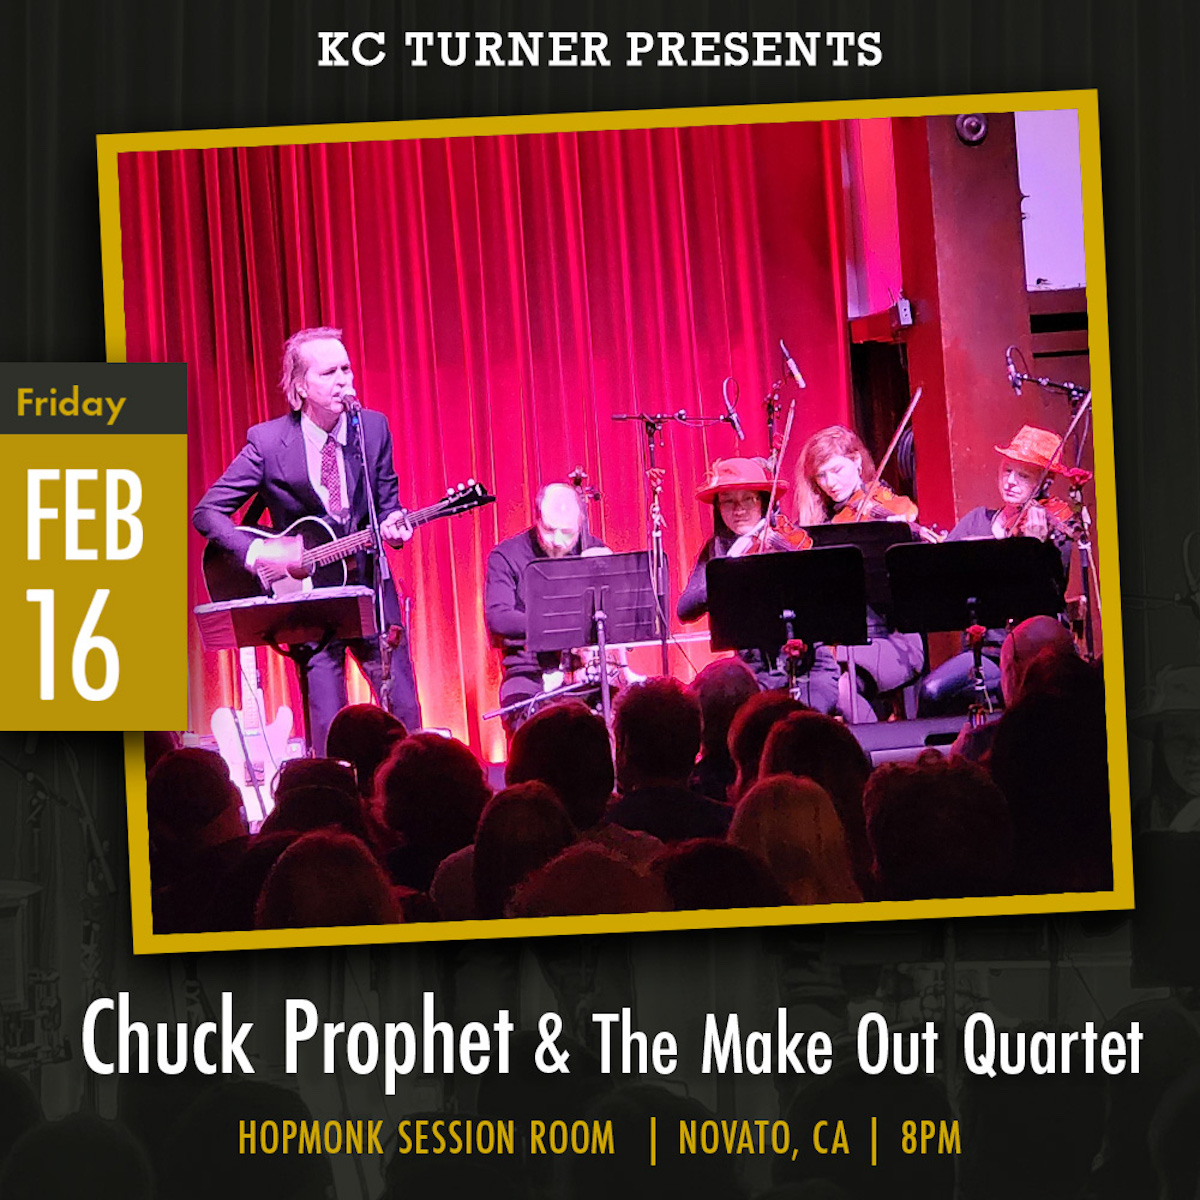 Chuck Prophet and the Make Out Quartet come to Novato February 16